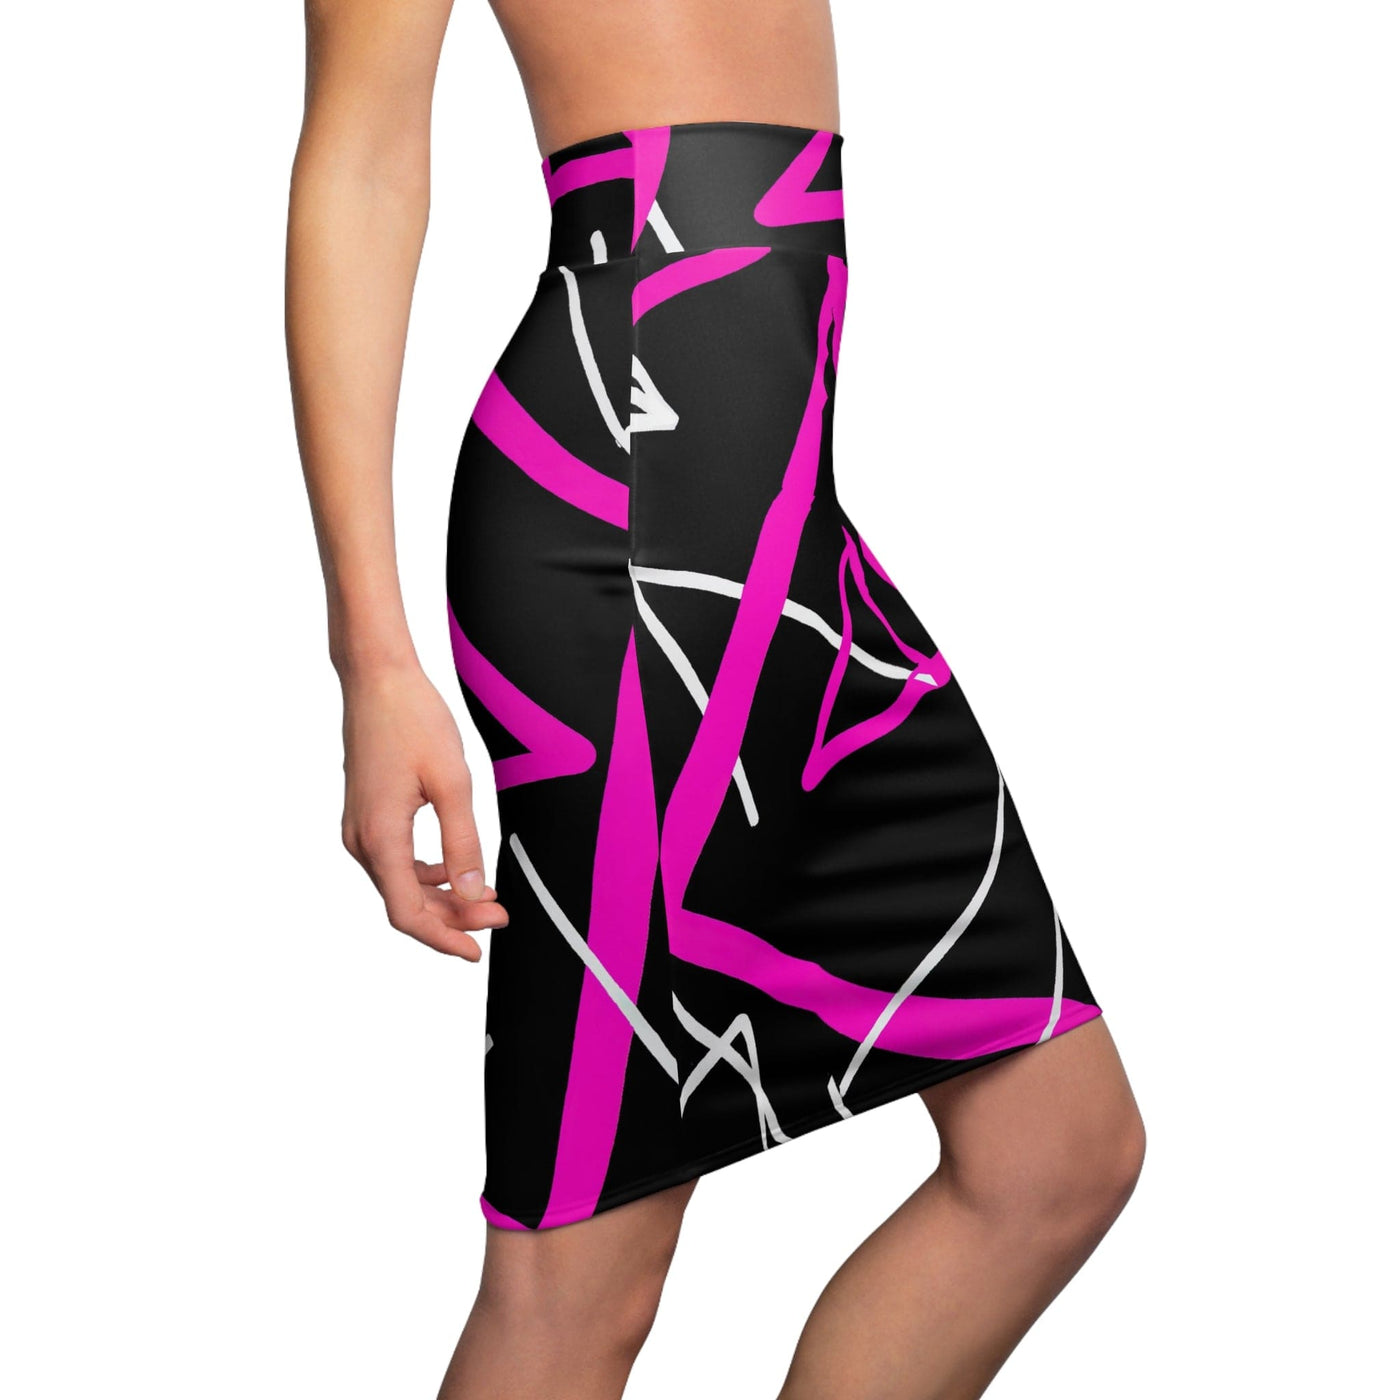 High Waist Womens Pencil Skirt - Contour Stretch - Black And Pink Geometric